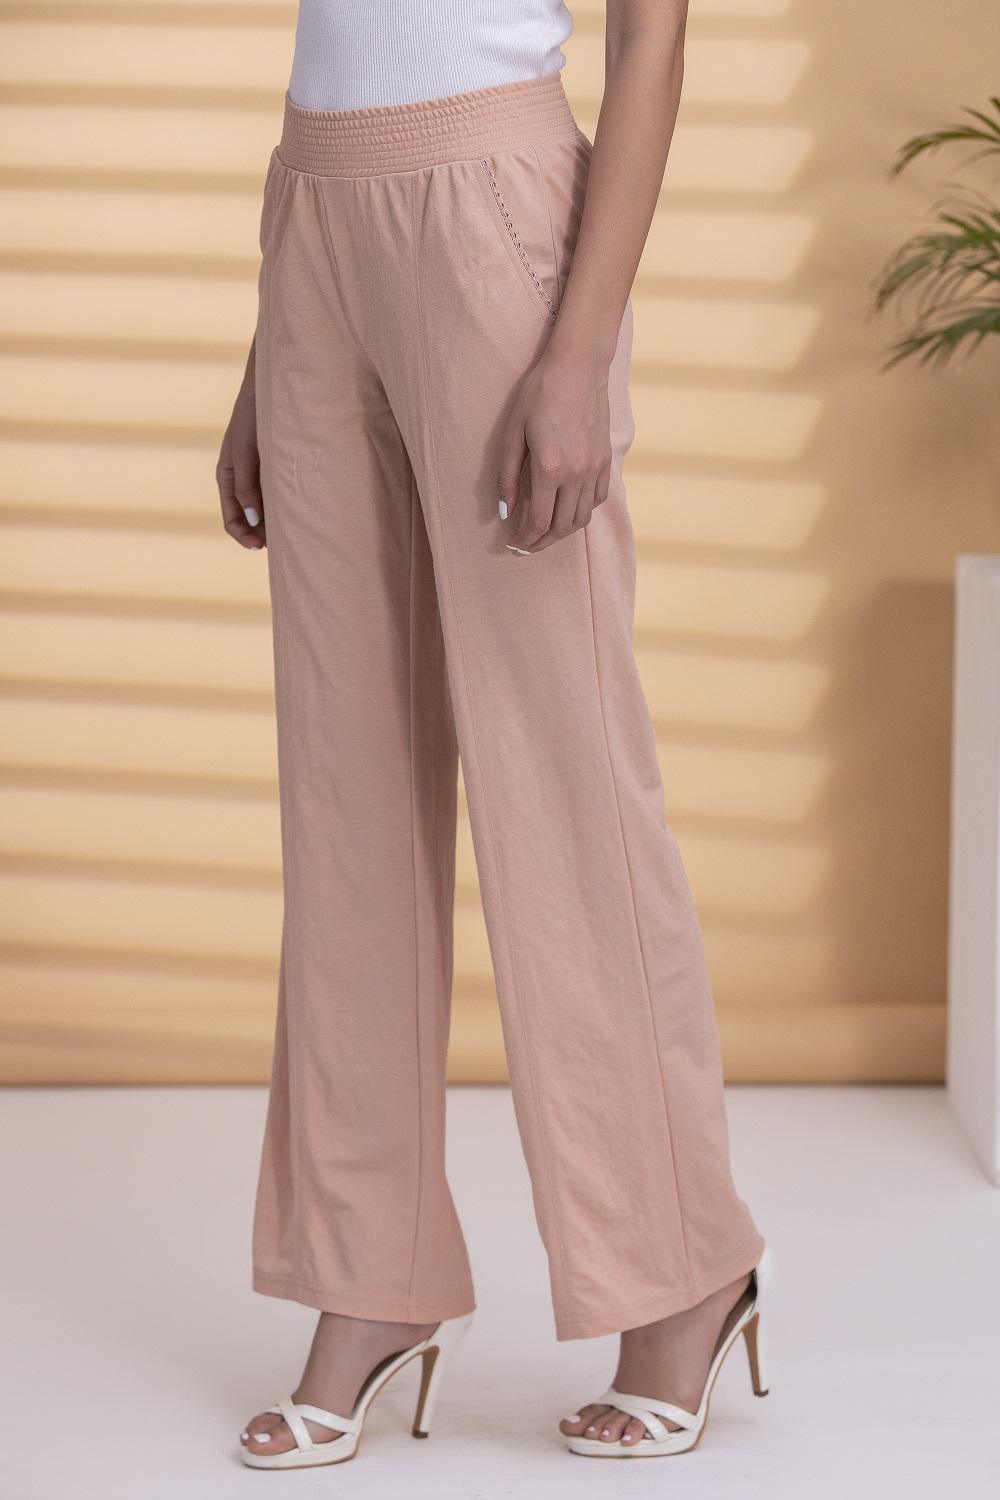 Women's/Girls Regular Fit Cotton Palazzo/Pants Daily/Casual Wear Peach_Free  Size